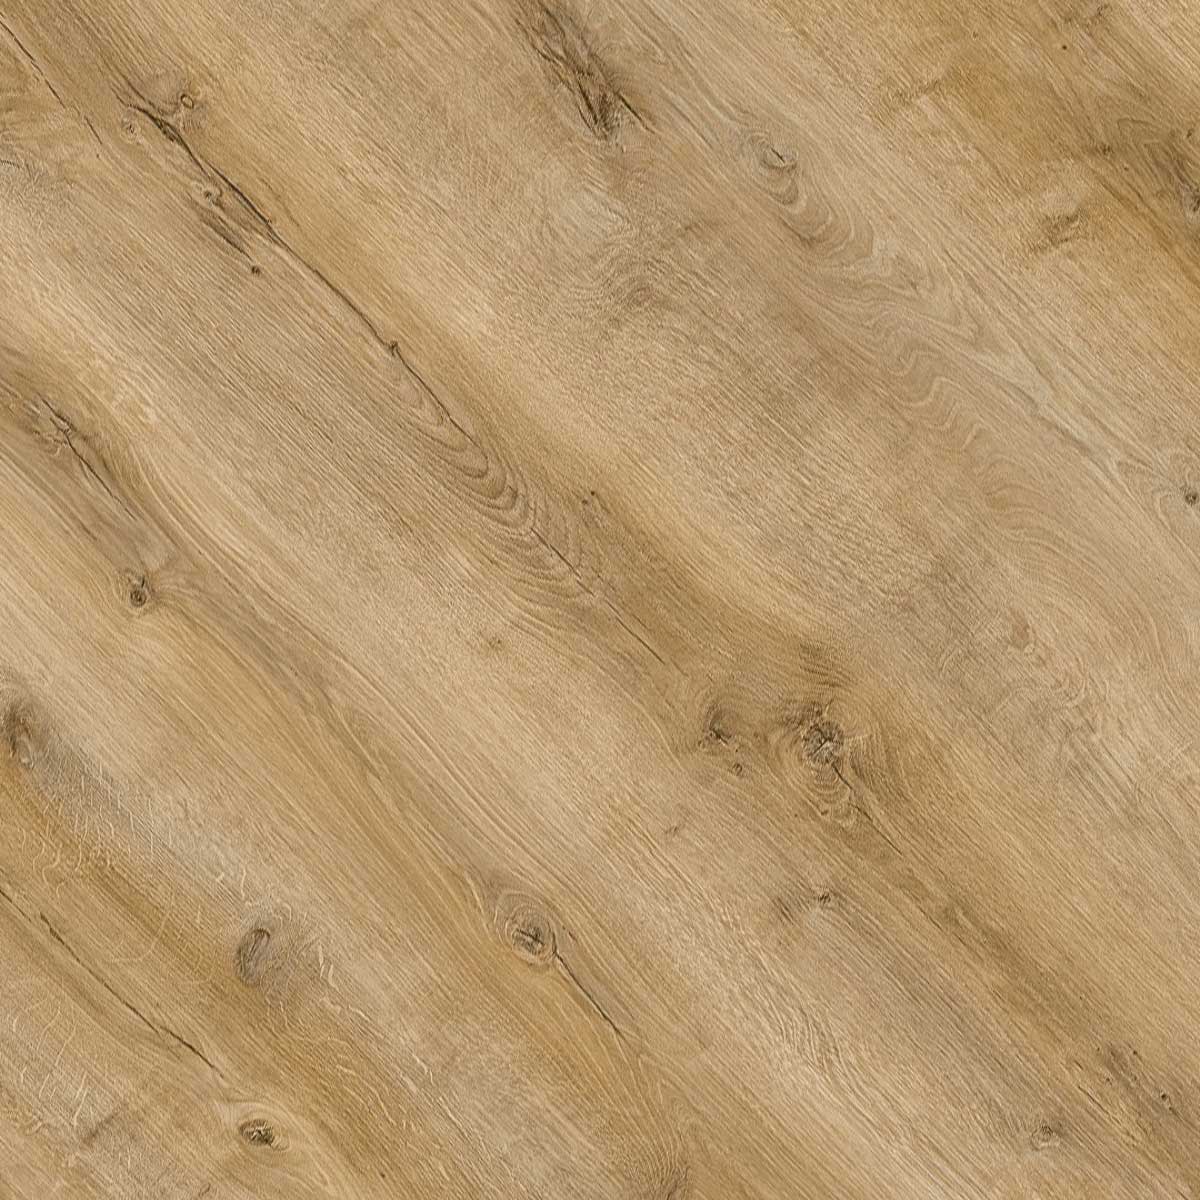 NAL52 Hammer Beam Oak aqualock of v4 wood flooring